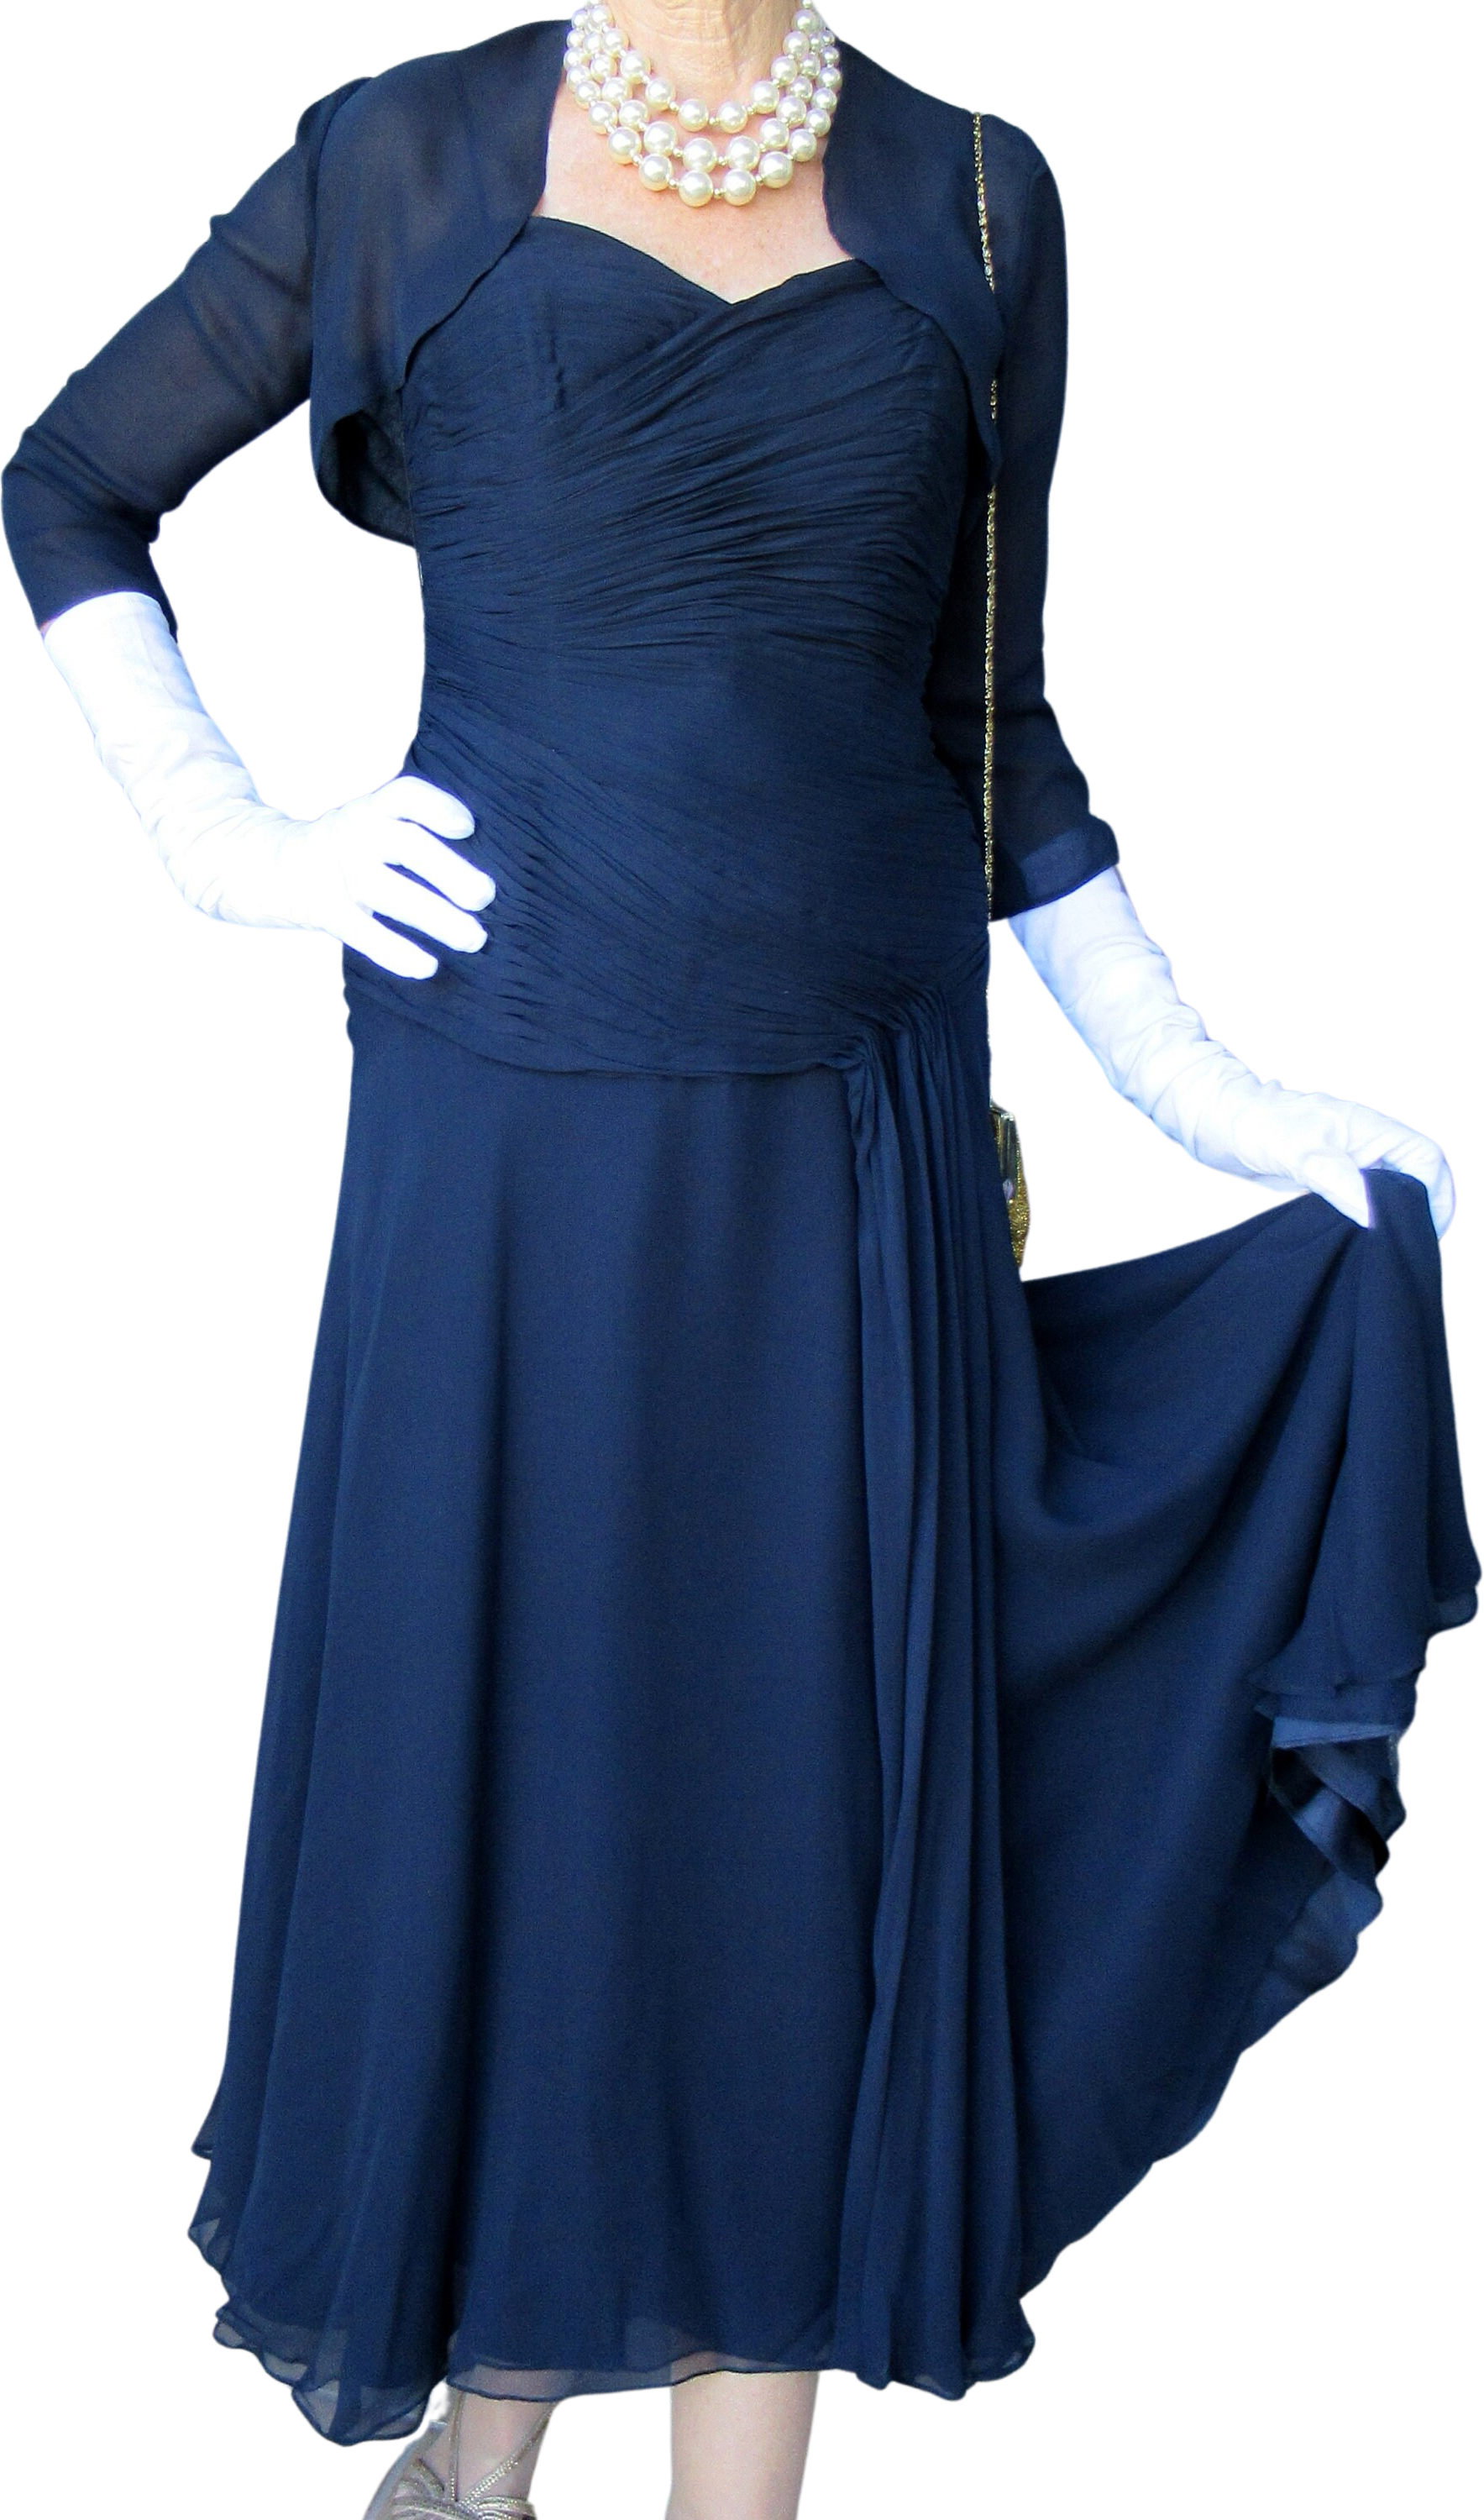 Strapless Dress Formal Padded Bra Top Navy Blue Cm Couture Spaghetti Strap  Back Zipper Full Sheer Skirt with Front Panel